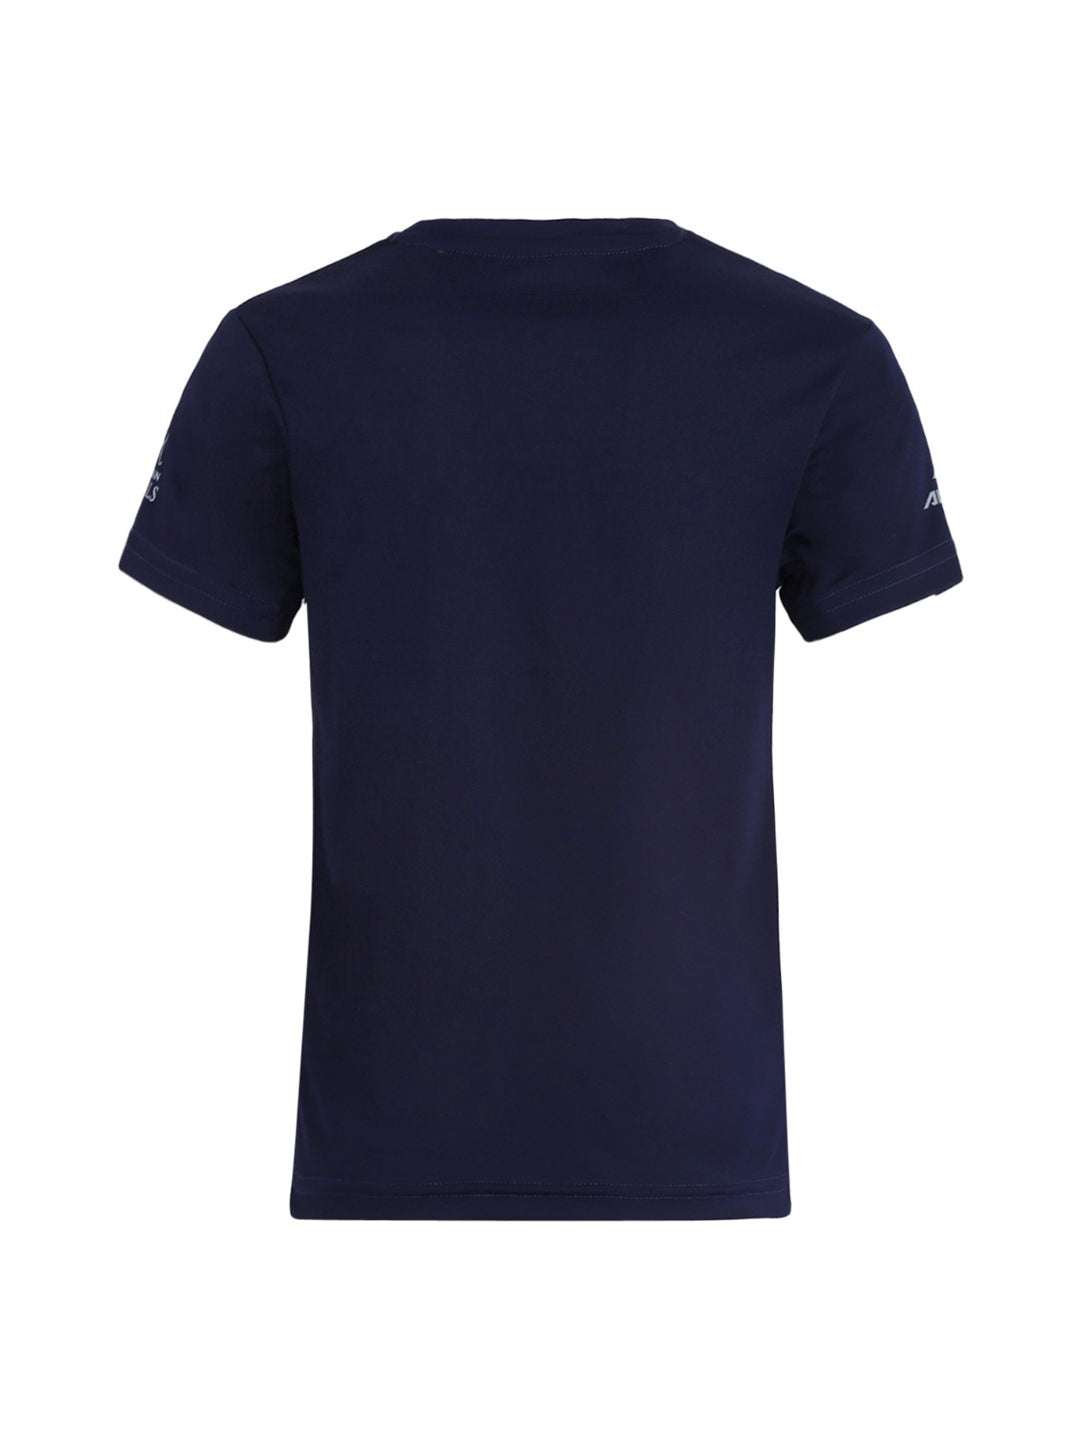 Alcis Boys Rajasthan Royals Navy Blue Printed Round Neck Dri-FIT T-shirt